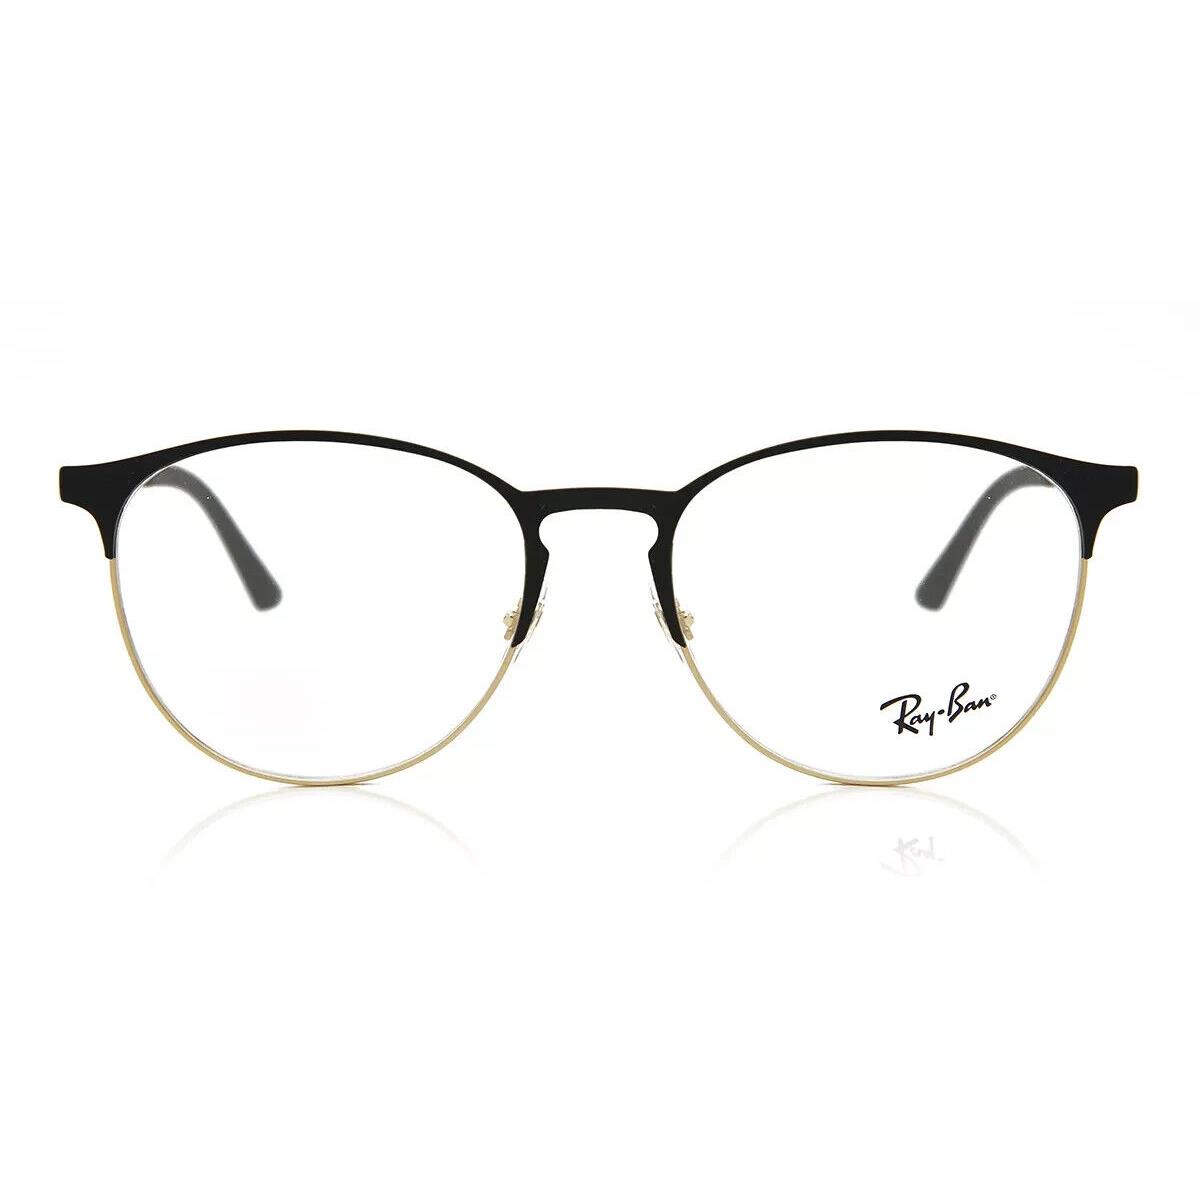 Ray-Ban eyeglasses  - Matte Black and Gold Frame 2